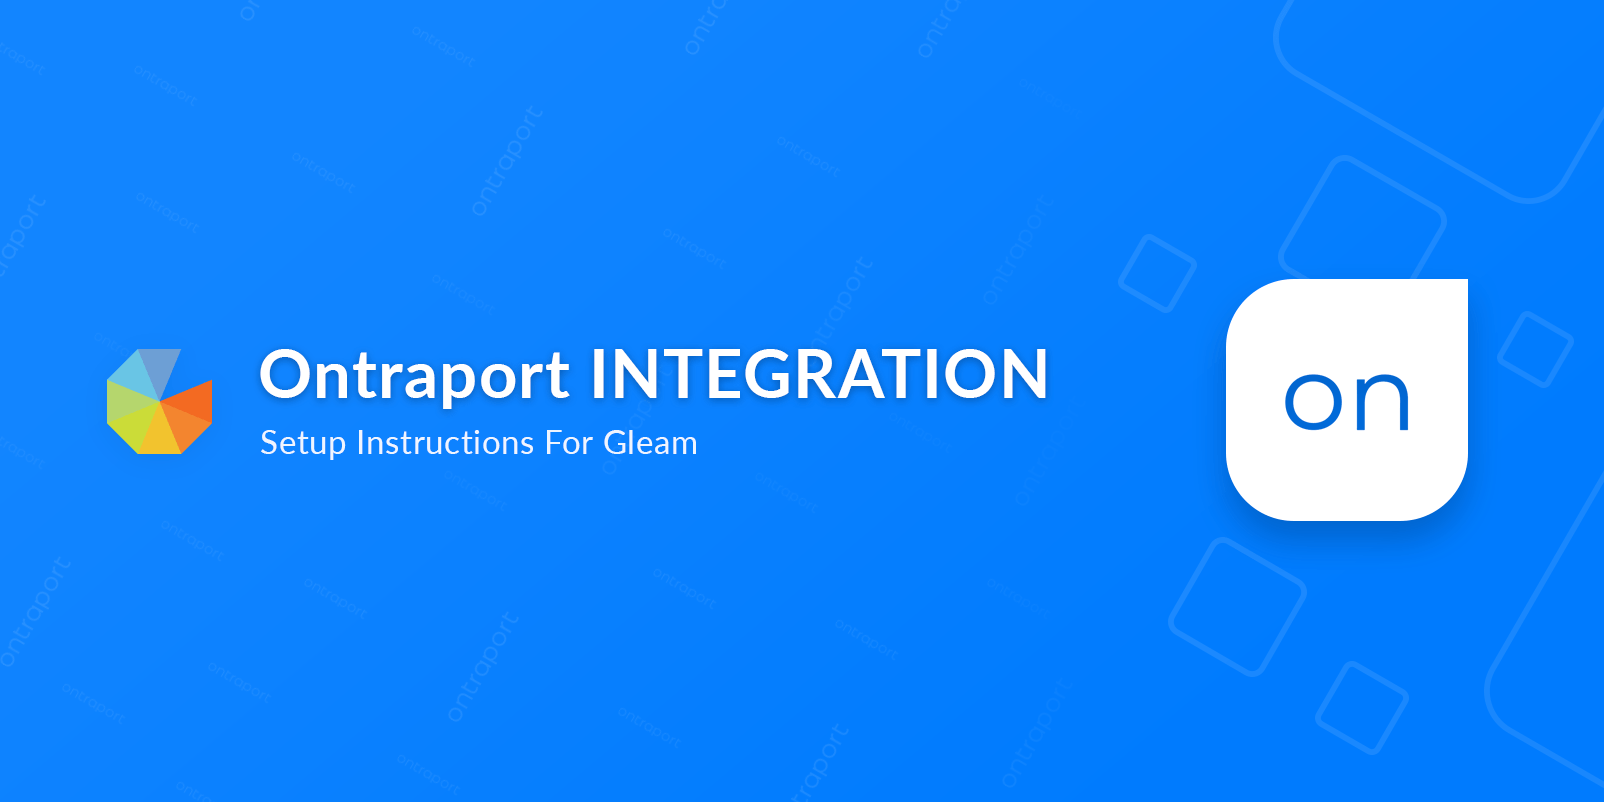 Ontraport integration setup instructions for Gleam